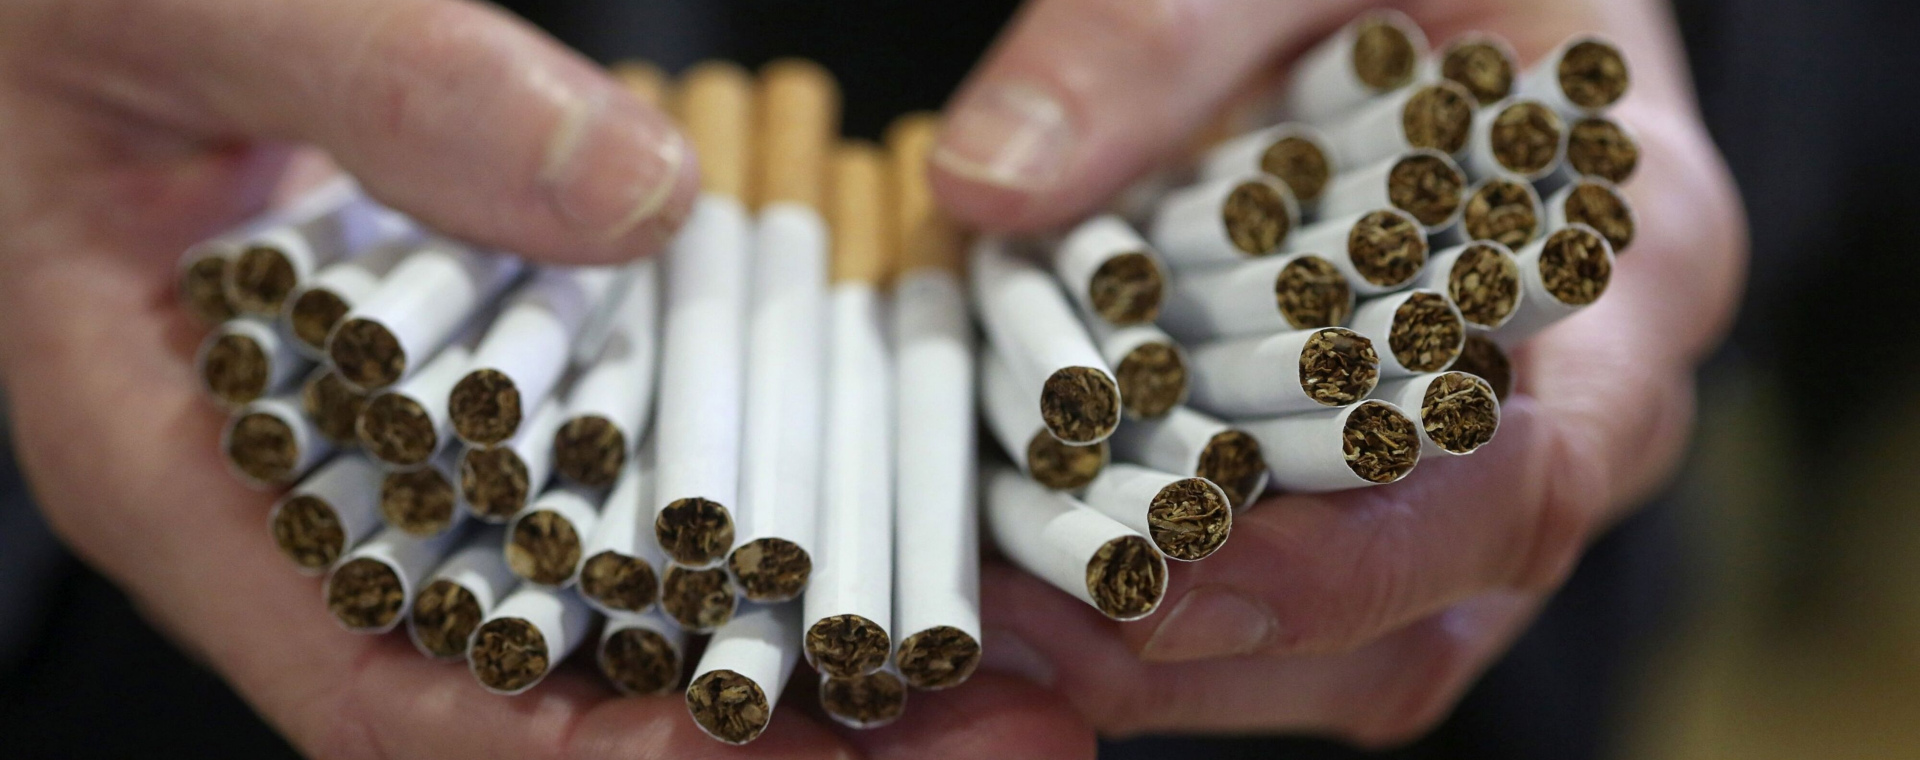  Konsumsi Rokok Murah Meningkat, Aturan Tarif Cukai Jadi Biang Kerok